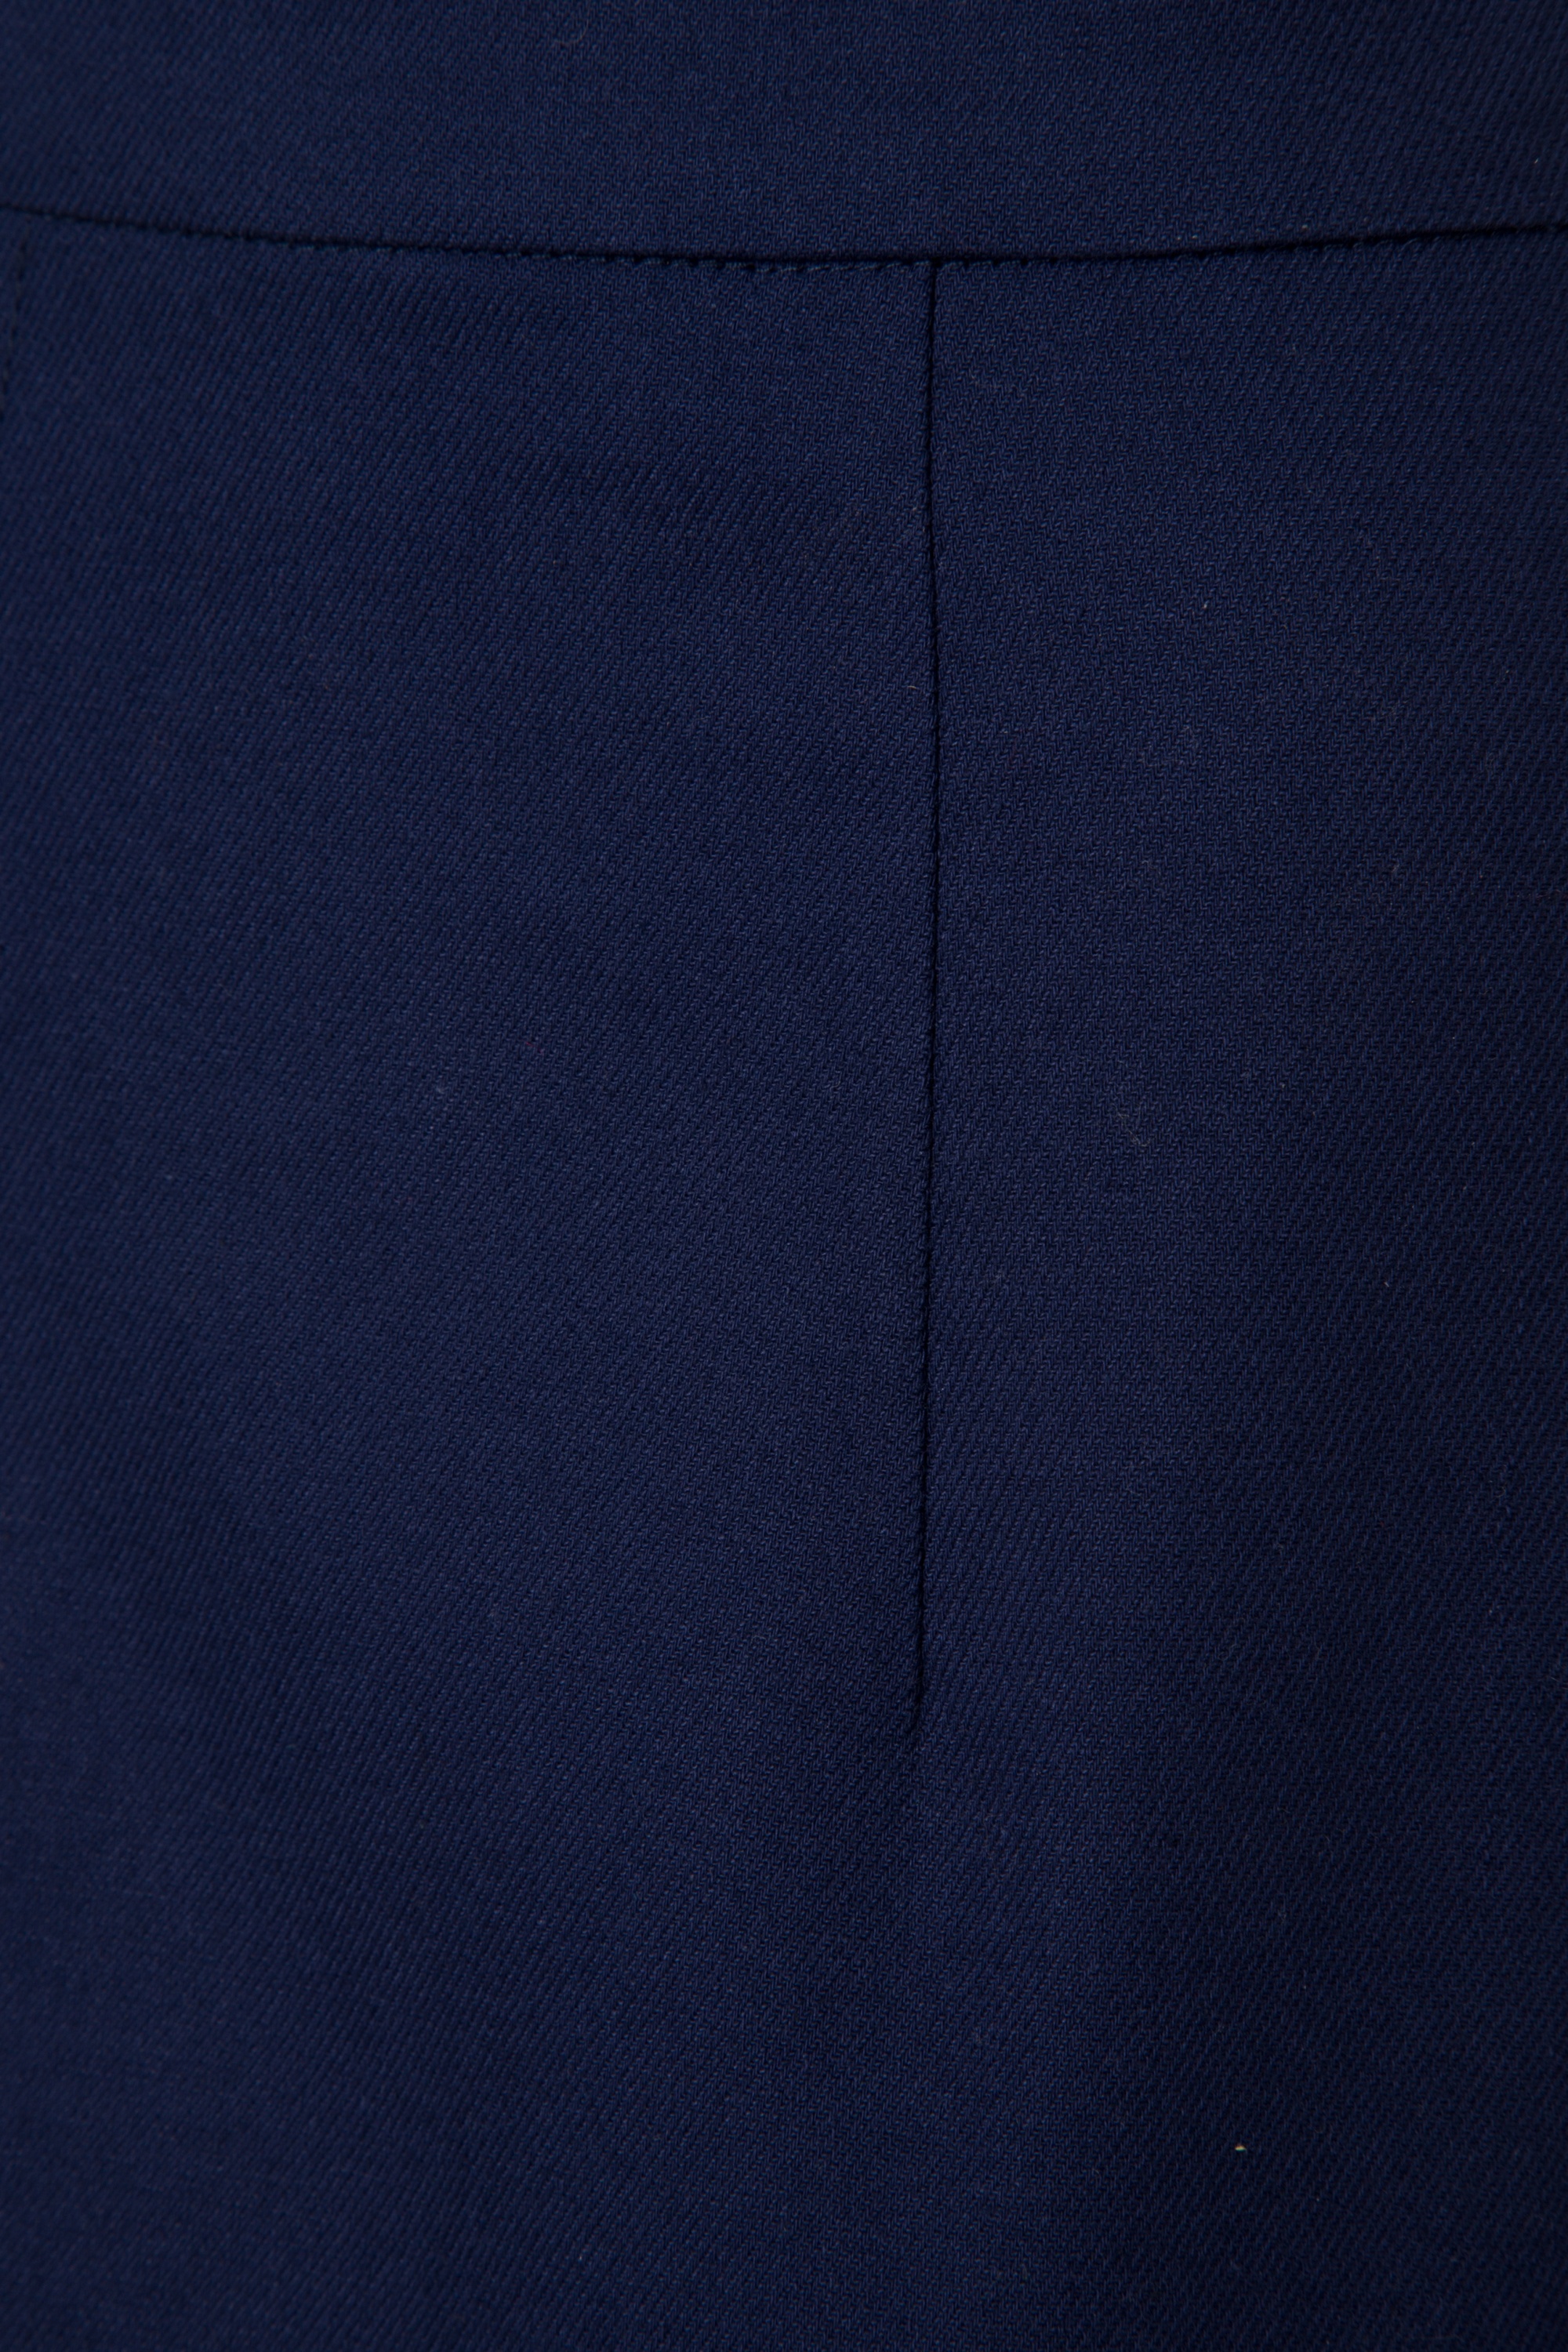 Collectif Clothing - Gracie Capris in marineblauw 3